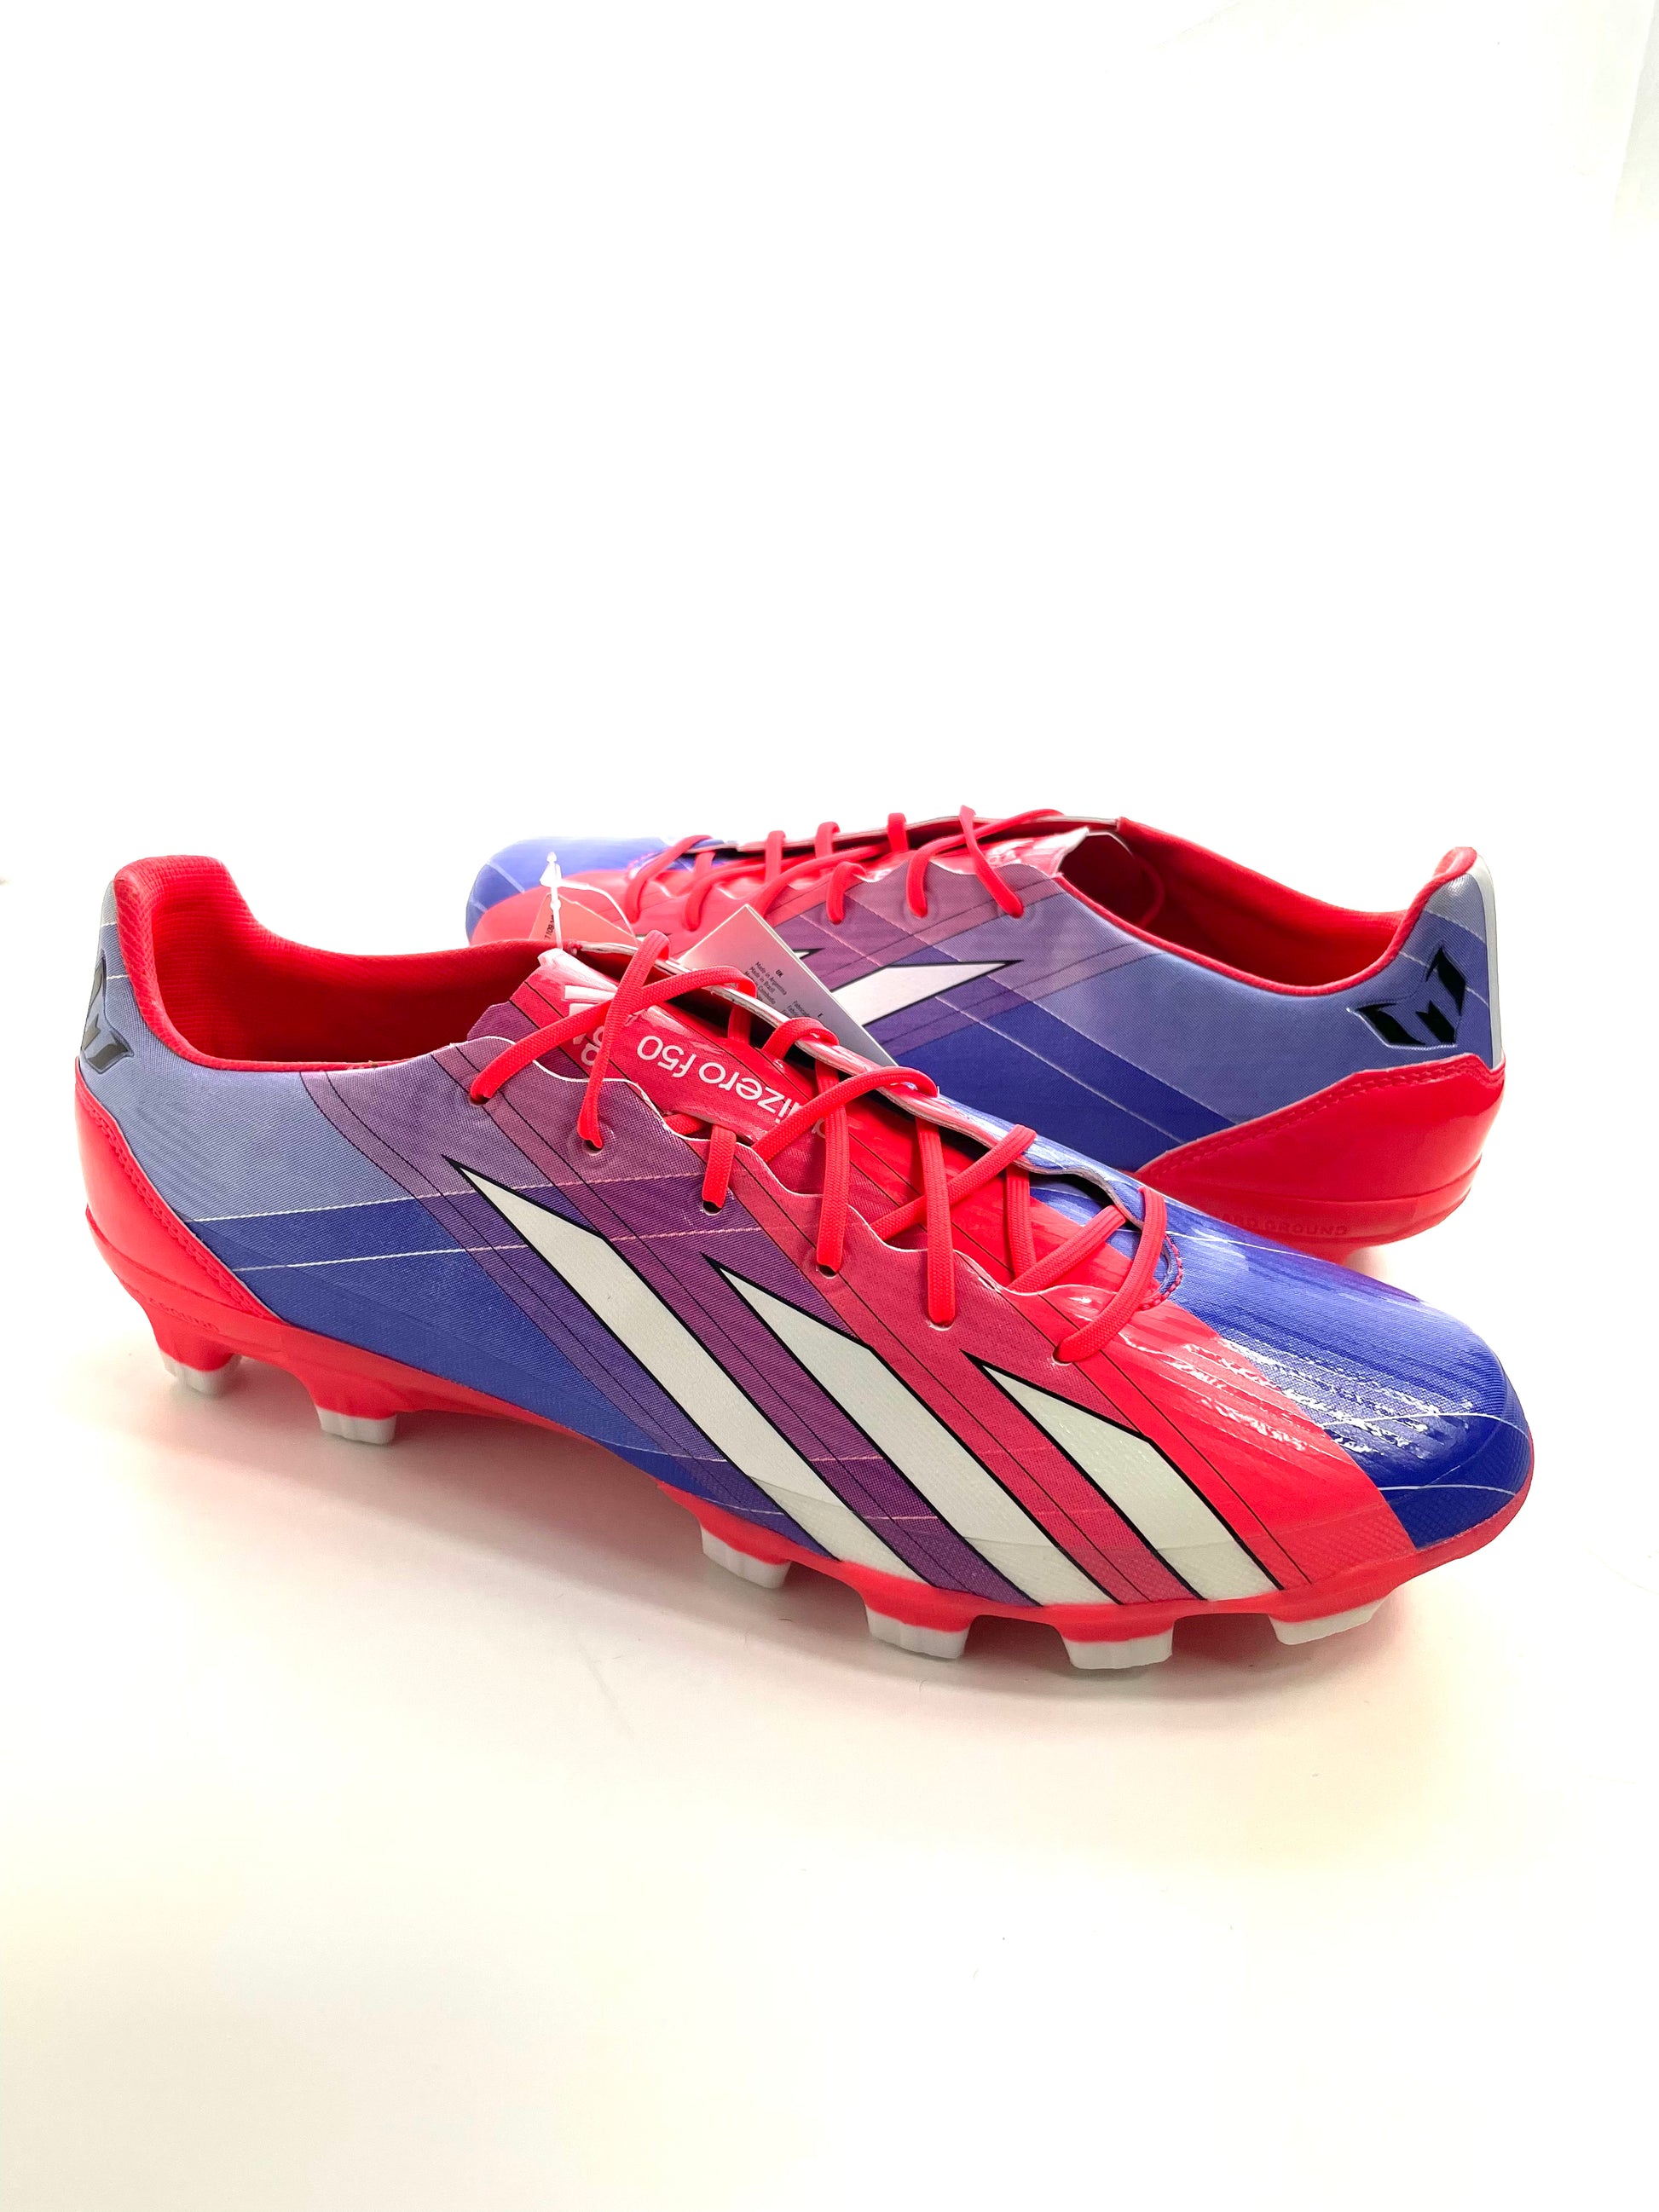 Adidas F50 Adizero Messi (AG) Halt's Boots